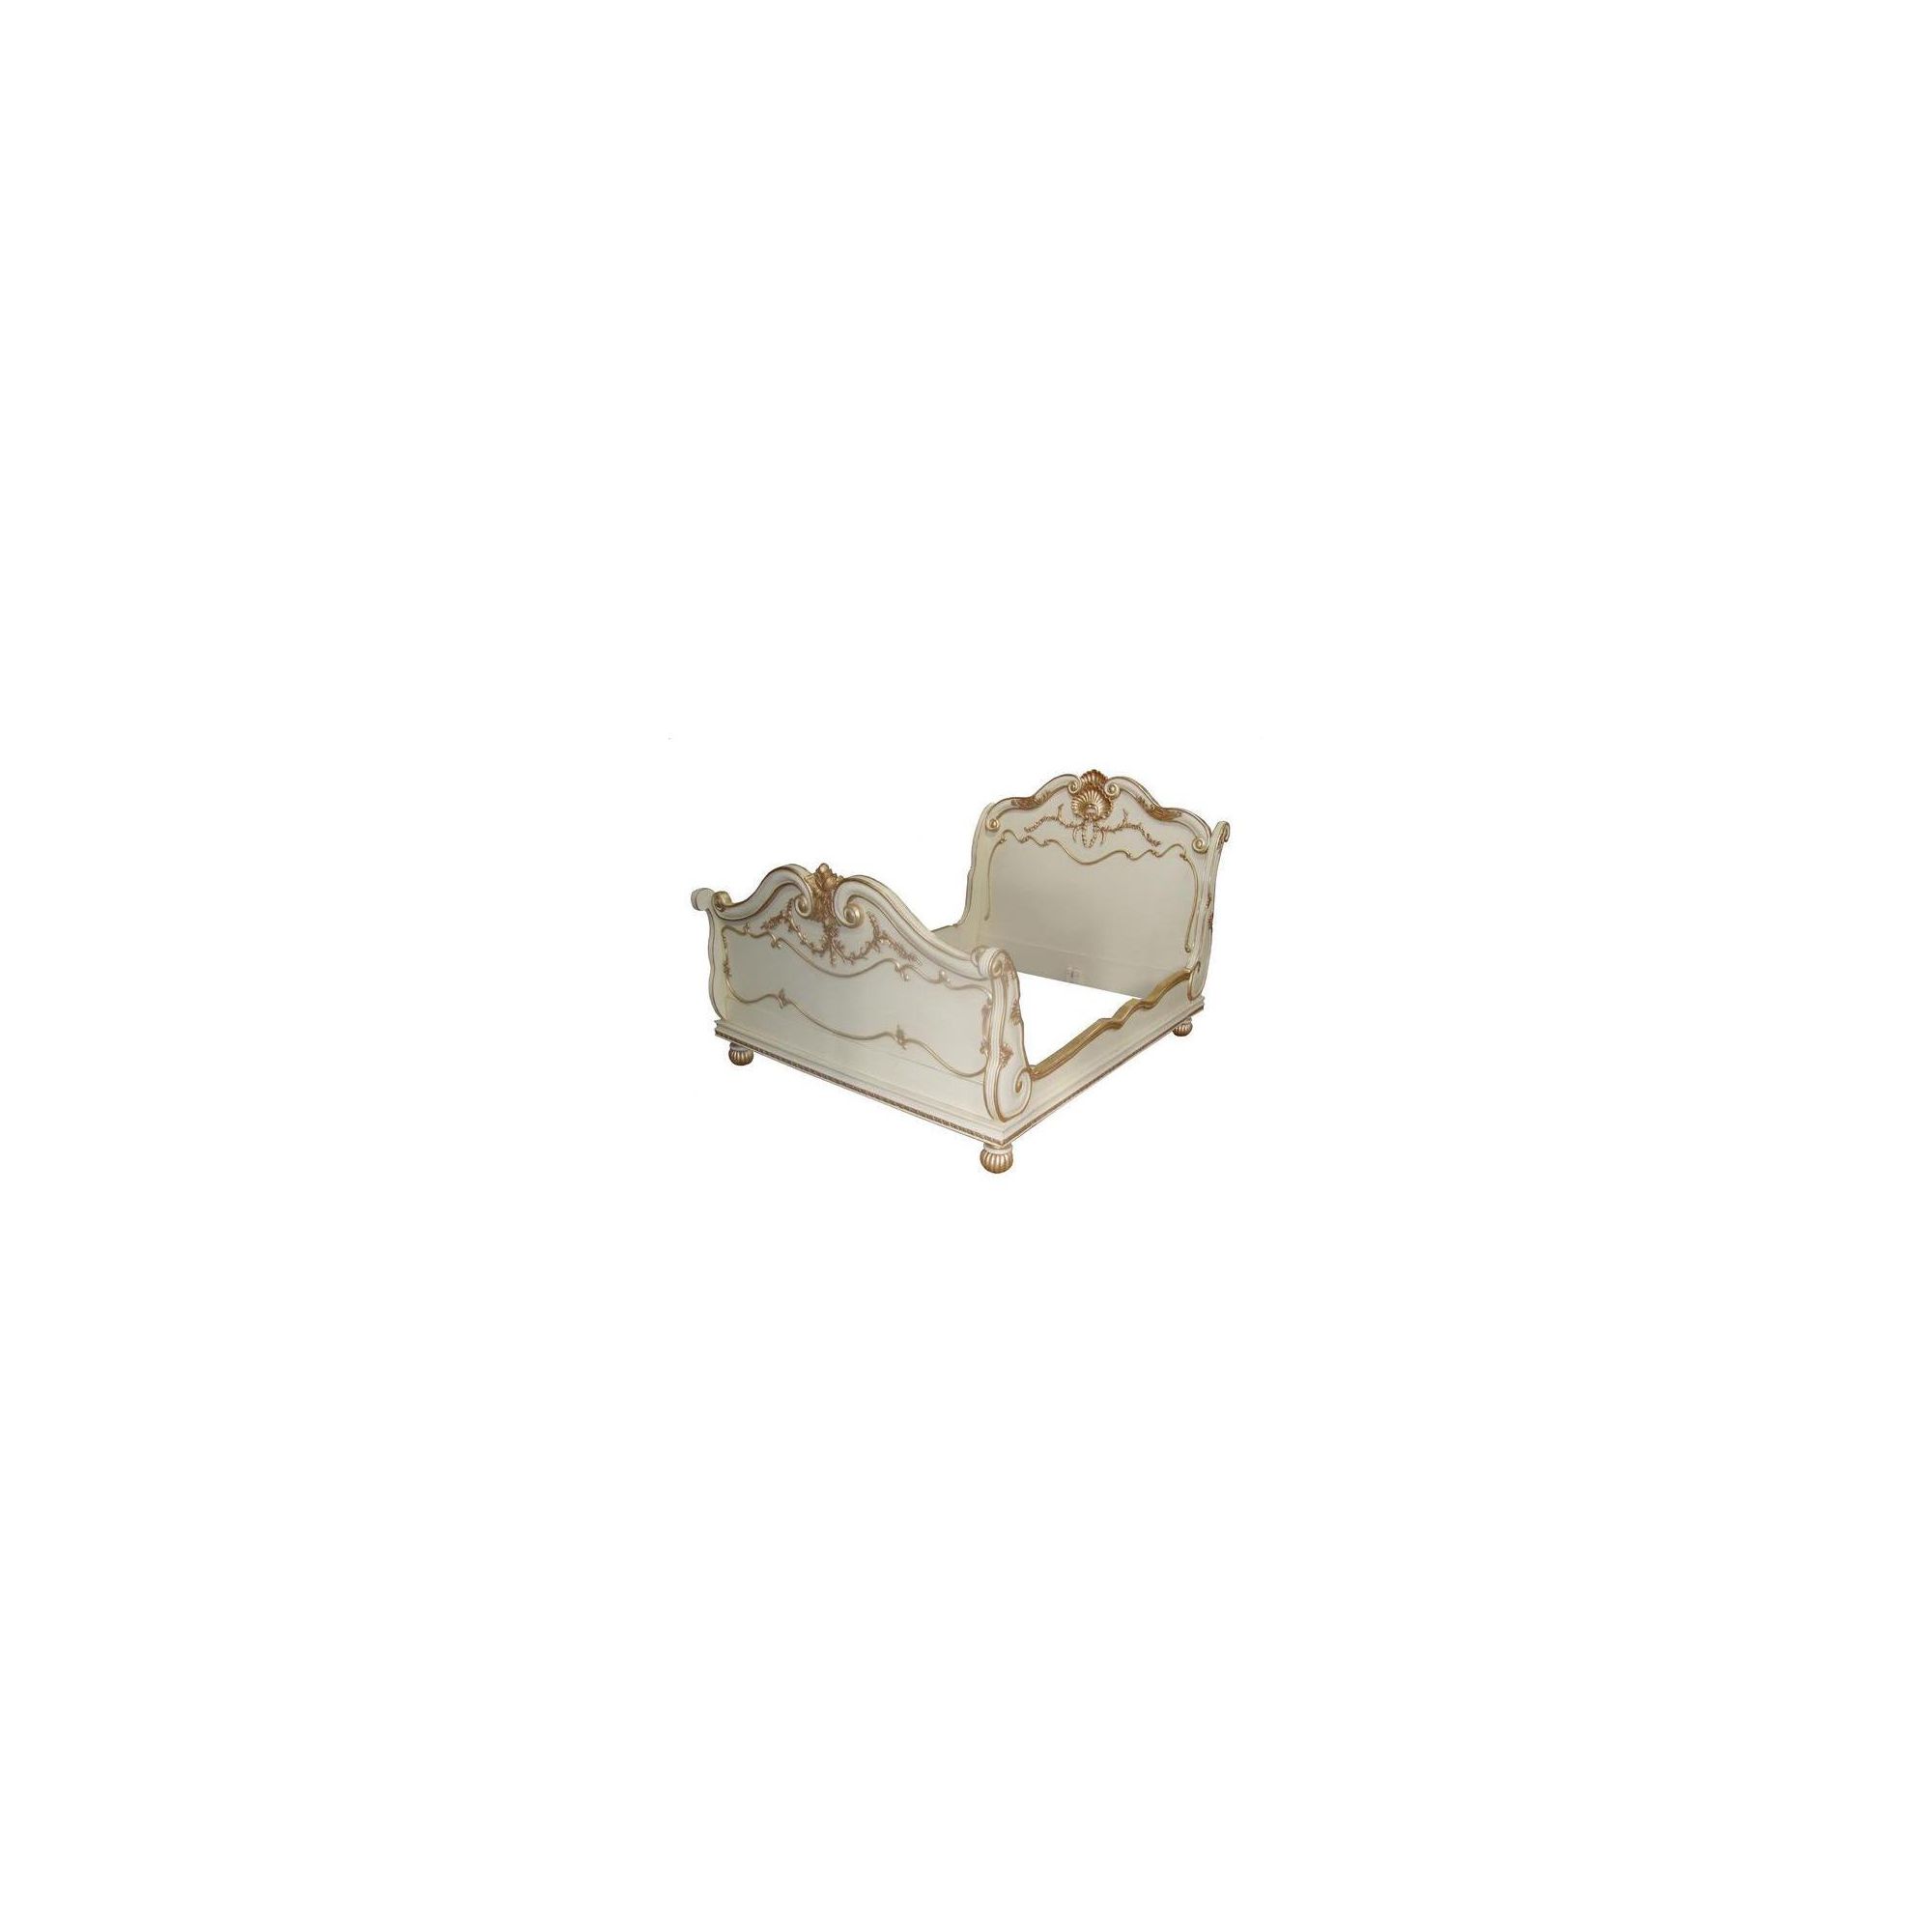 Lock stock and barrel Mahogany Shell Bed in Mahogany - Double - Antique White at Tescos Direct